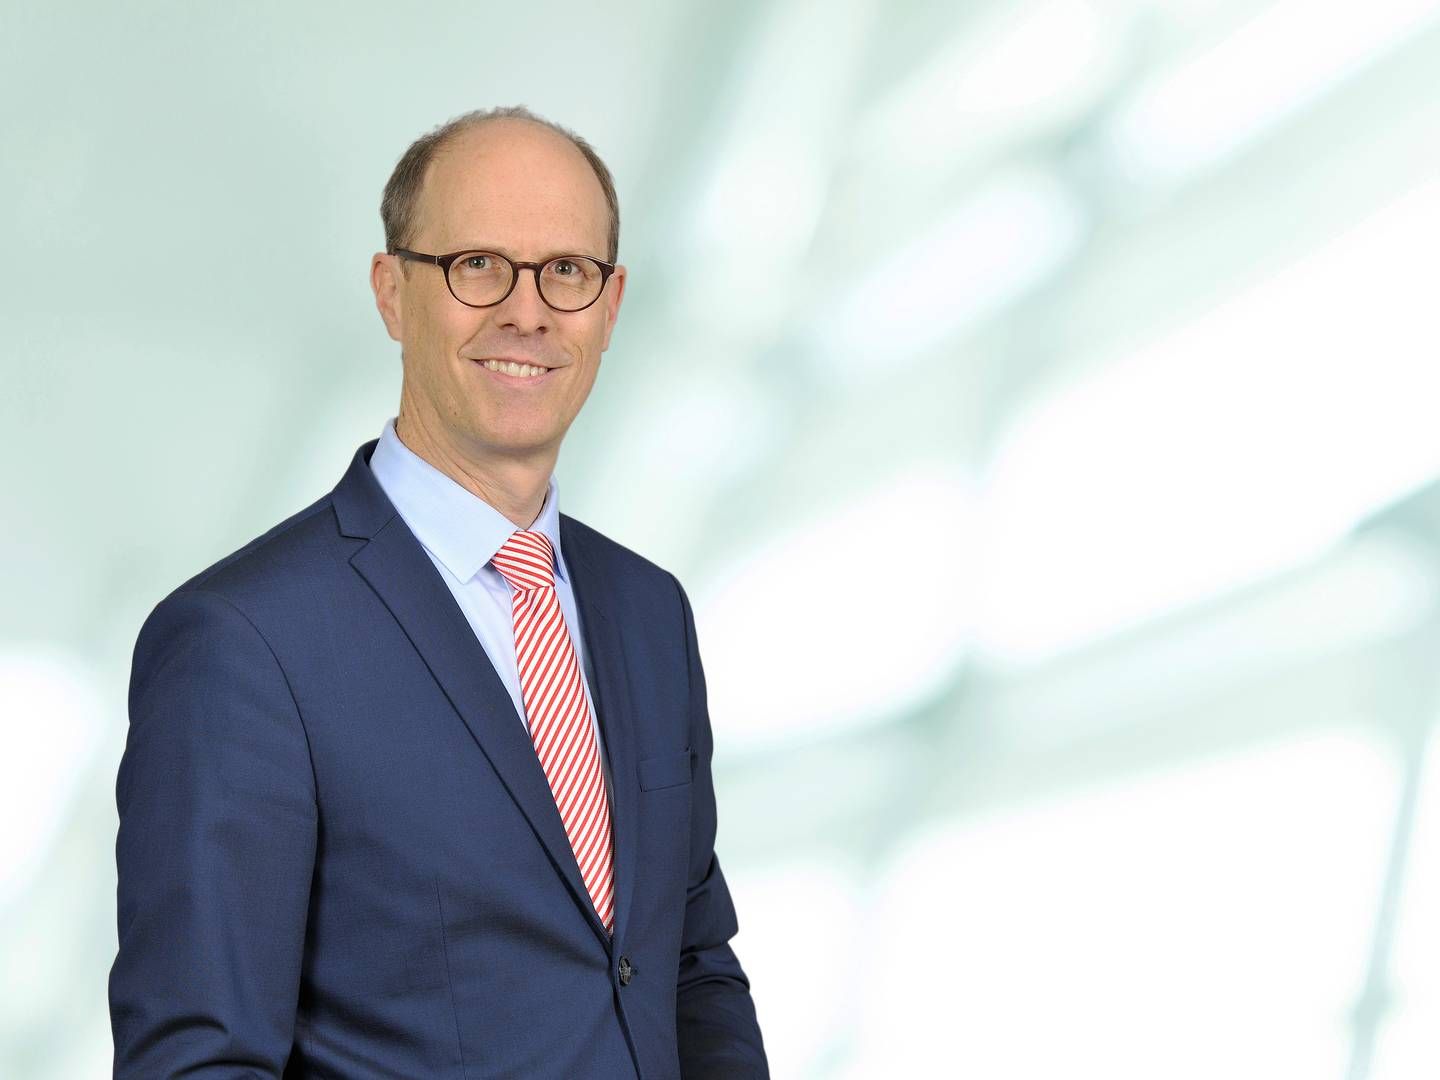 Michael Müller, CFO of RWE AG. | Photo: Rwe Pr